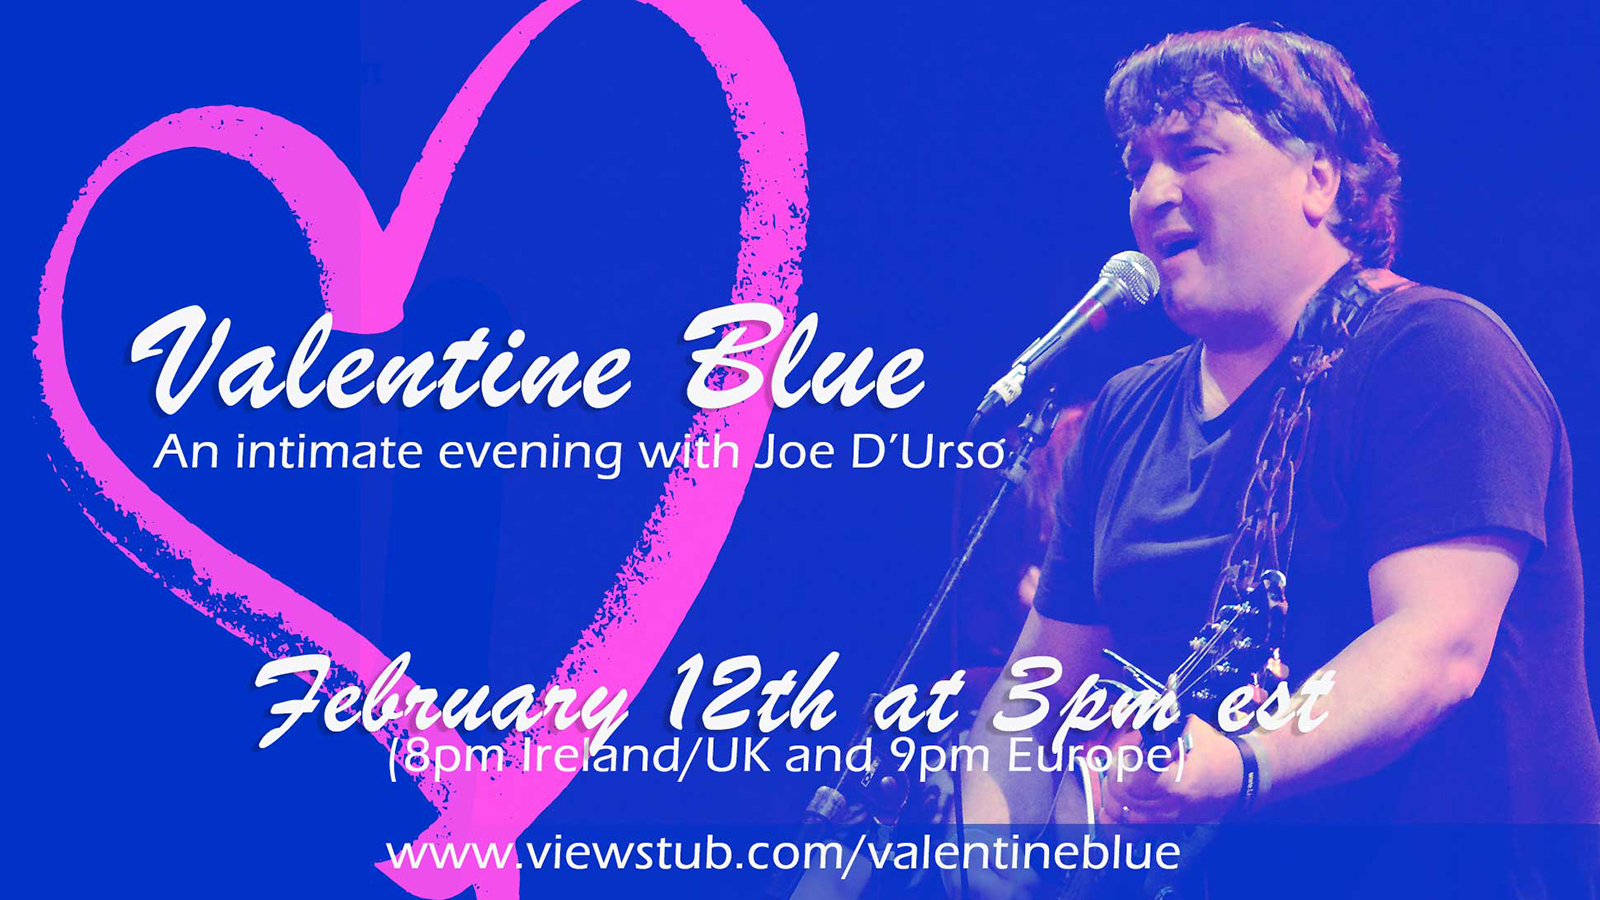 Valentine Blue: An Intimate Evening with Joe D'Urso